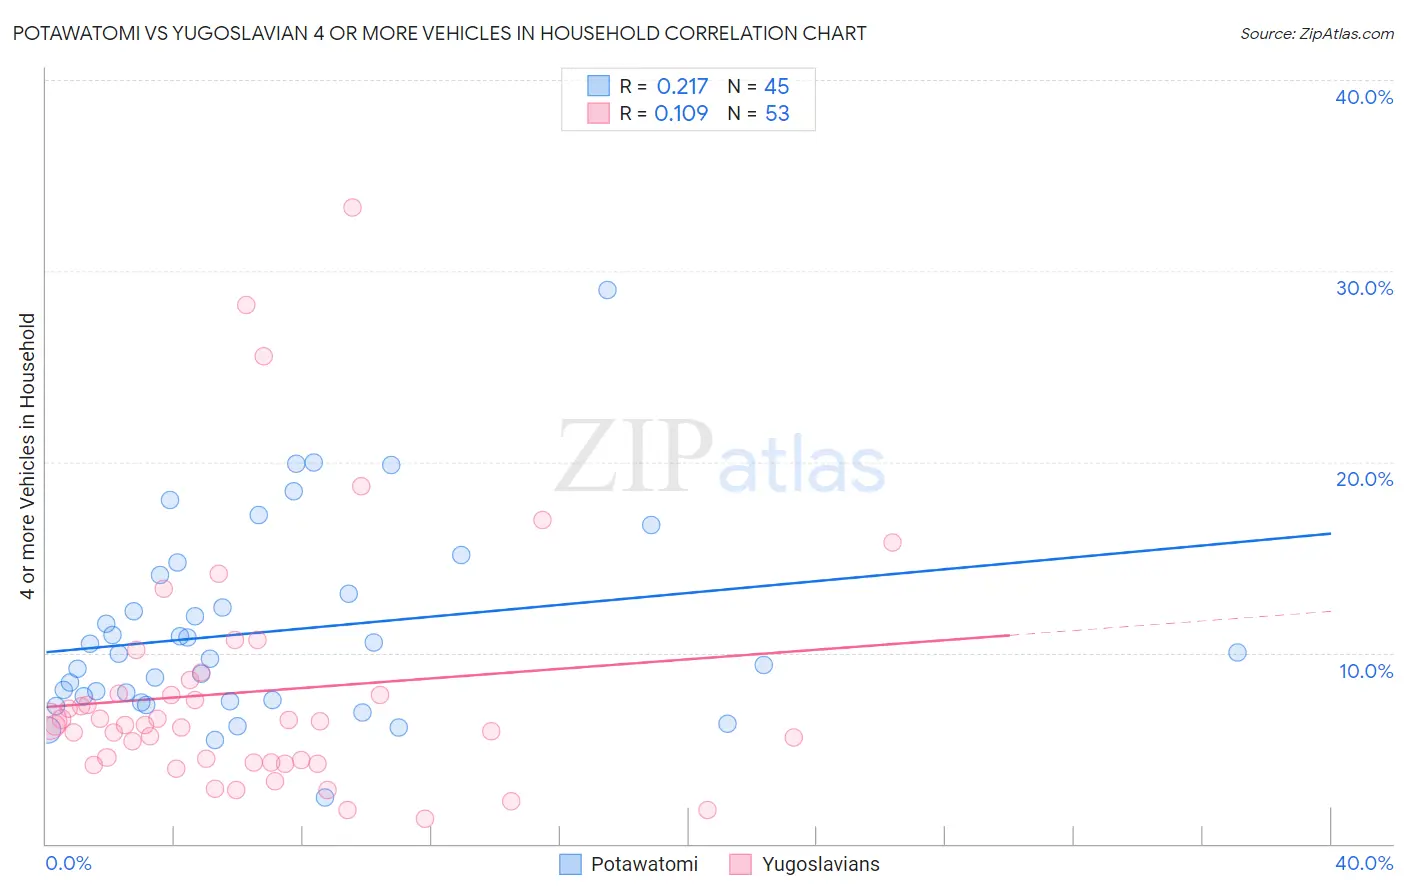 Potawatomi vs Yugoslavian 4 or more Vehicles in Household